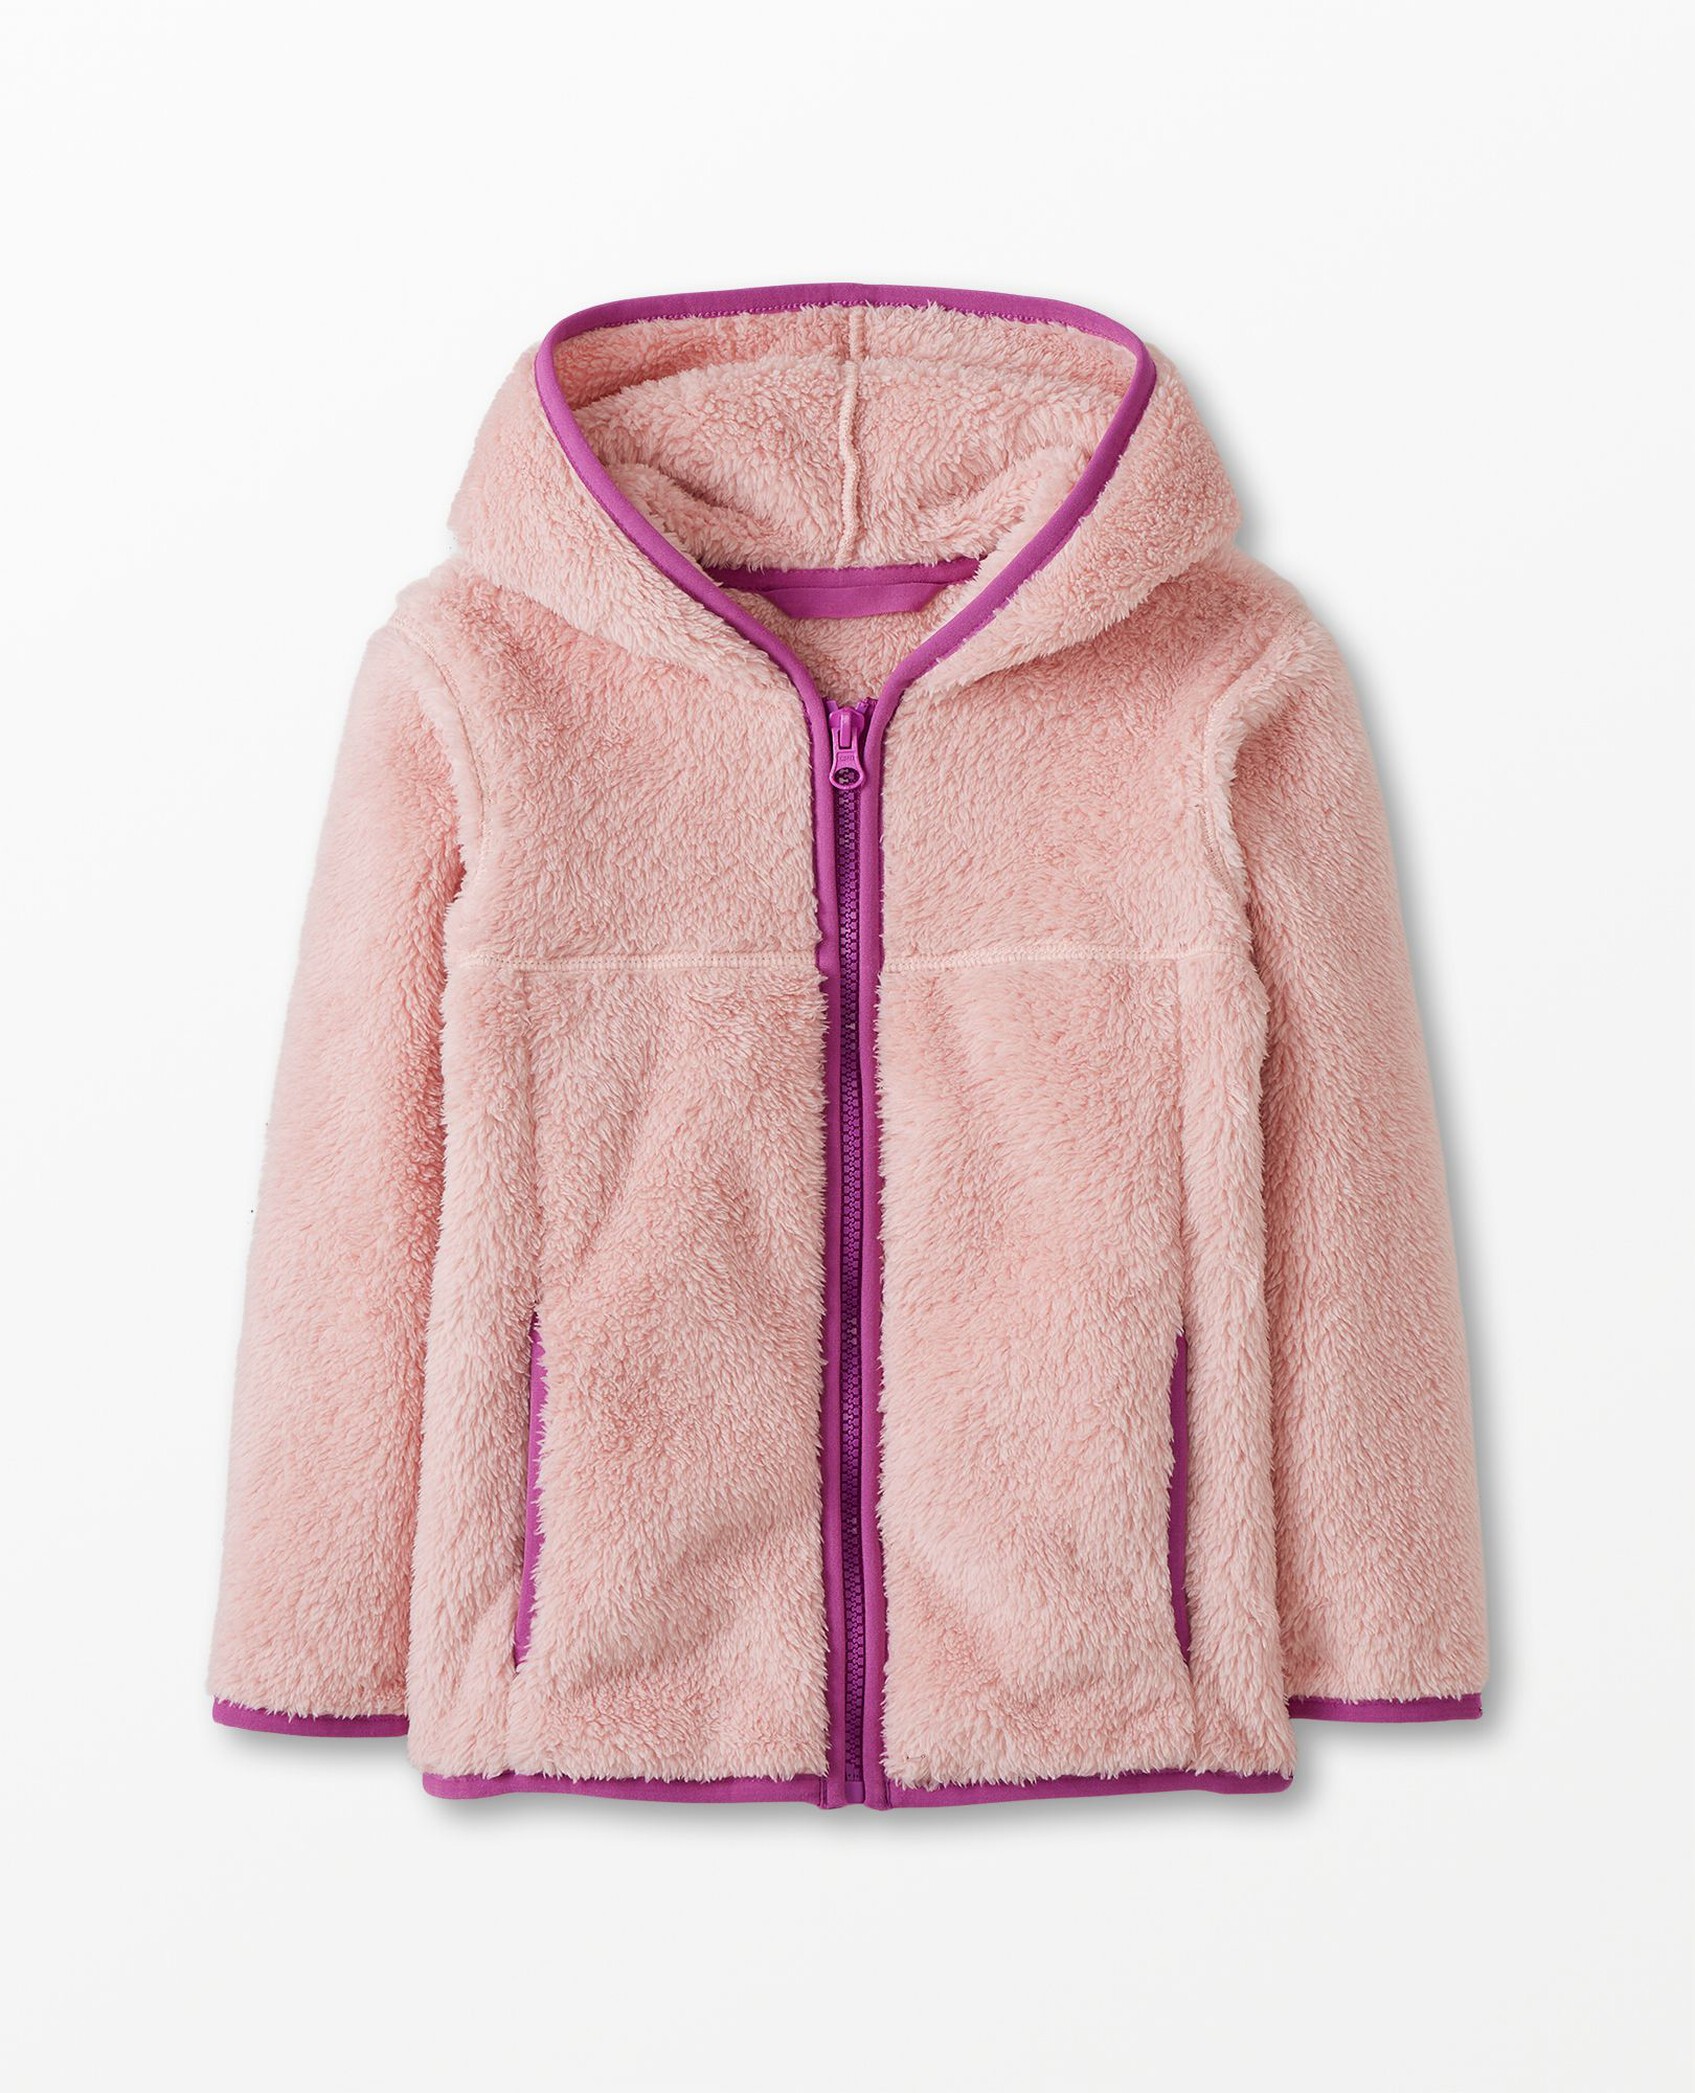 Marshmallow Fleece Zip Up Jacket | Hanna Andersson